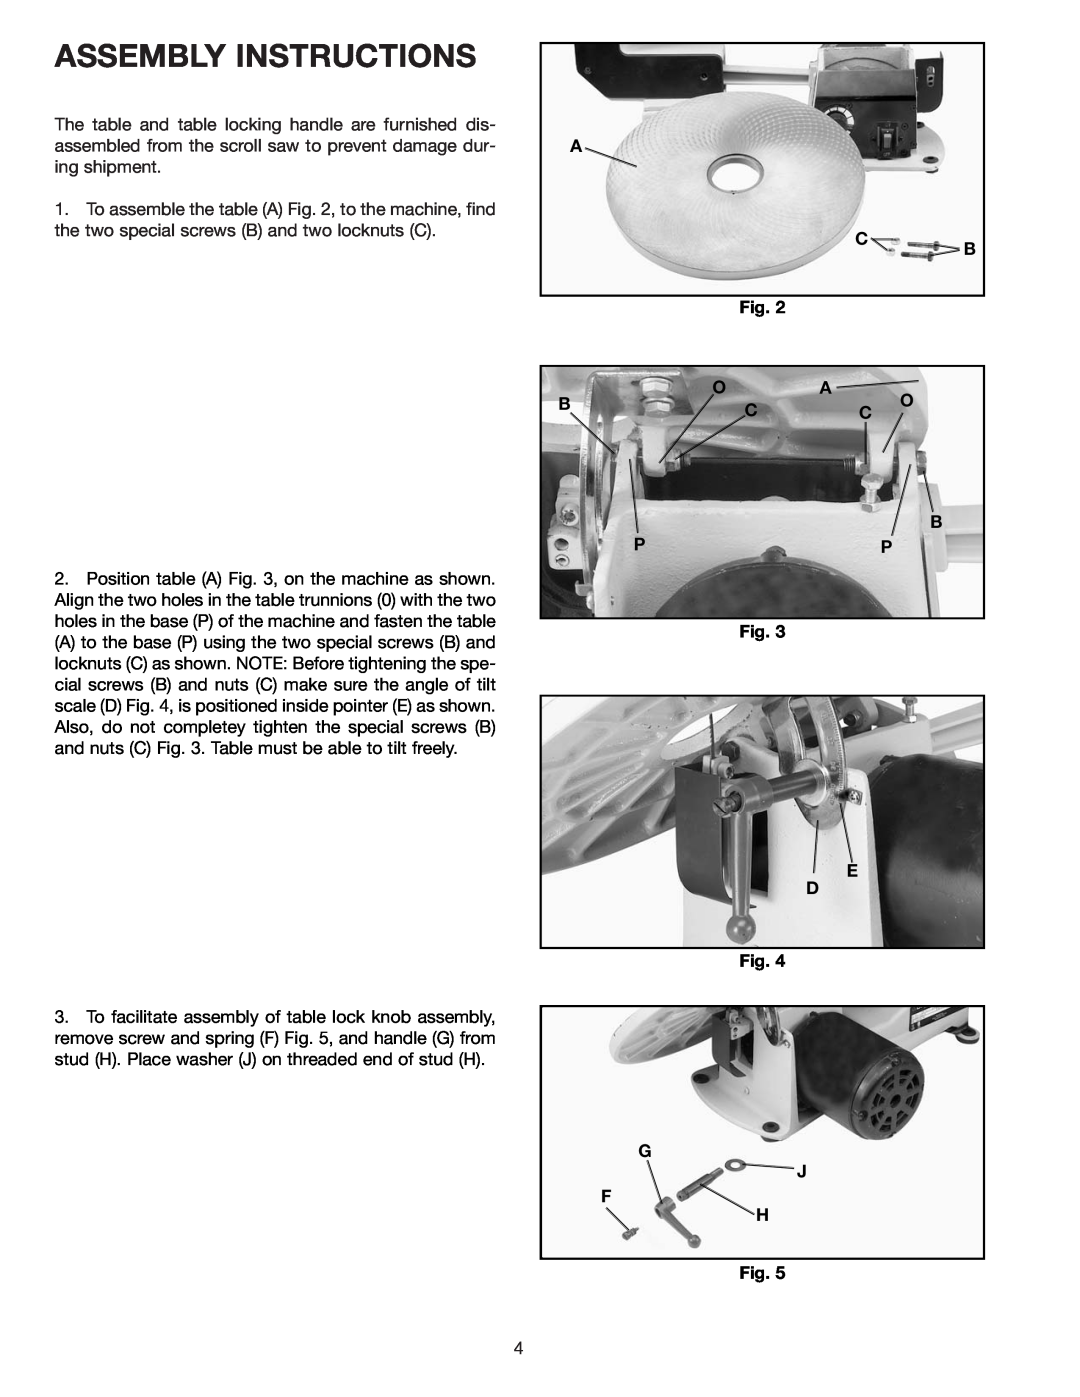 Delta 40-540 warranty Assembly Instructions, O A B Cc O B Pp, G J F H 